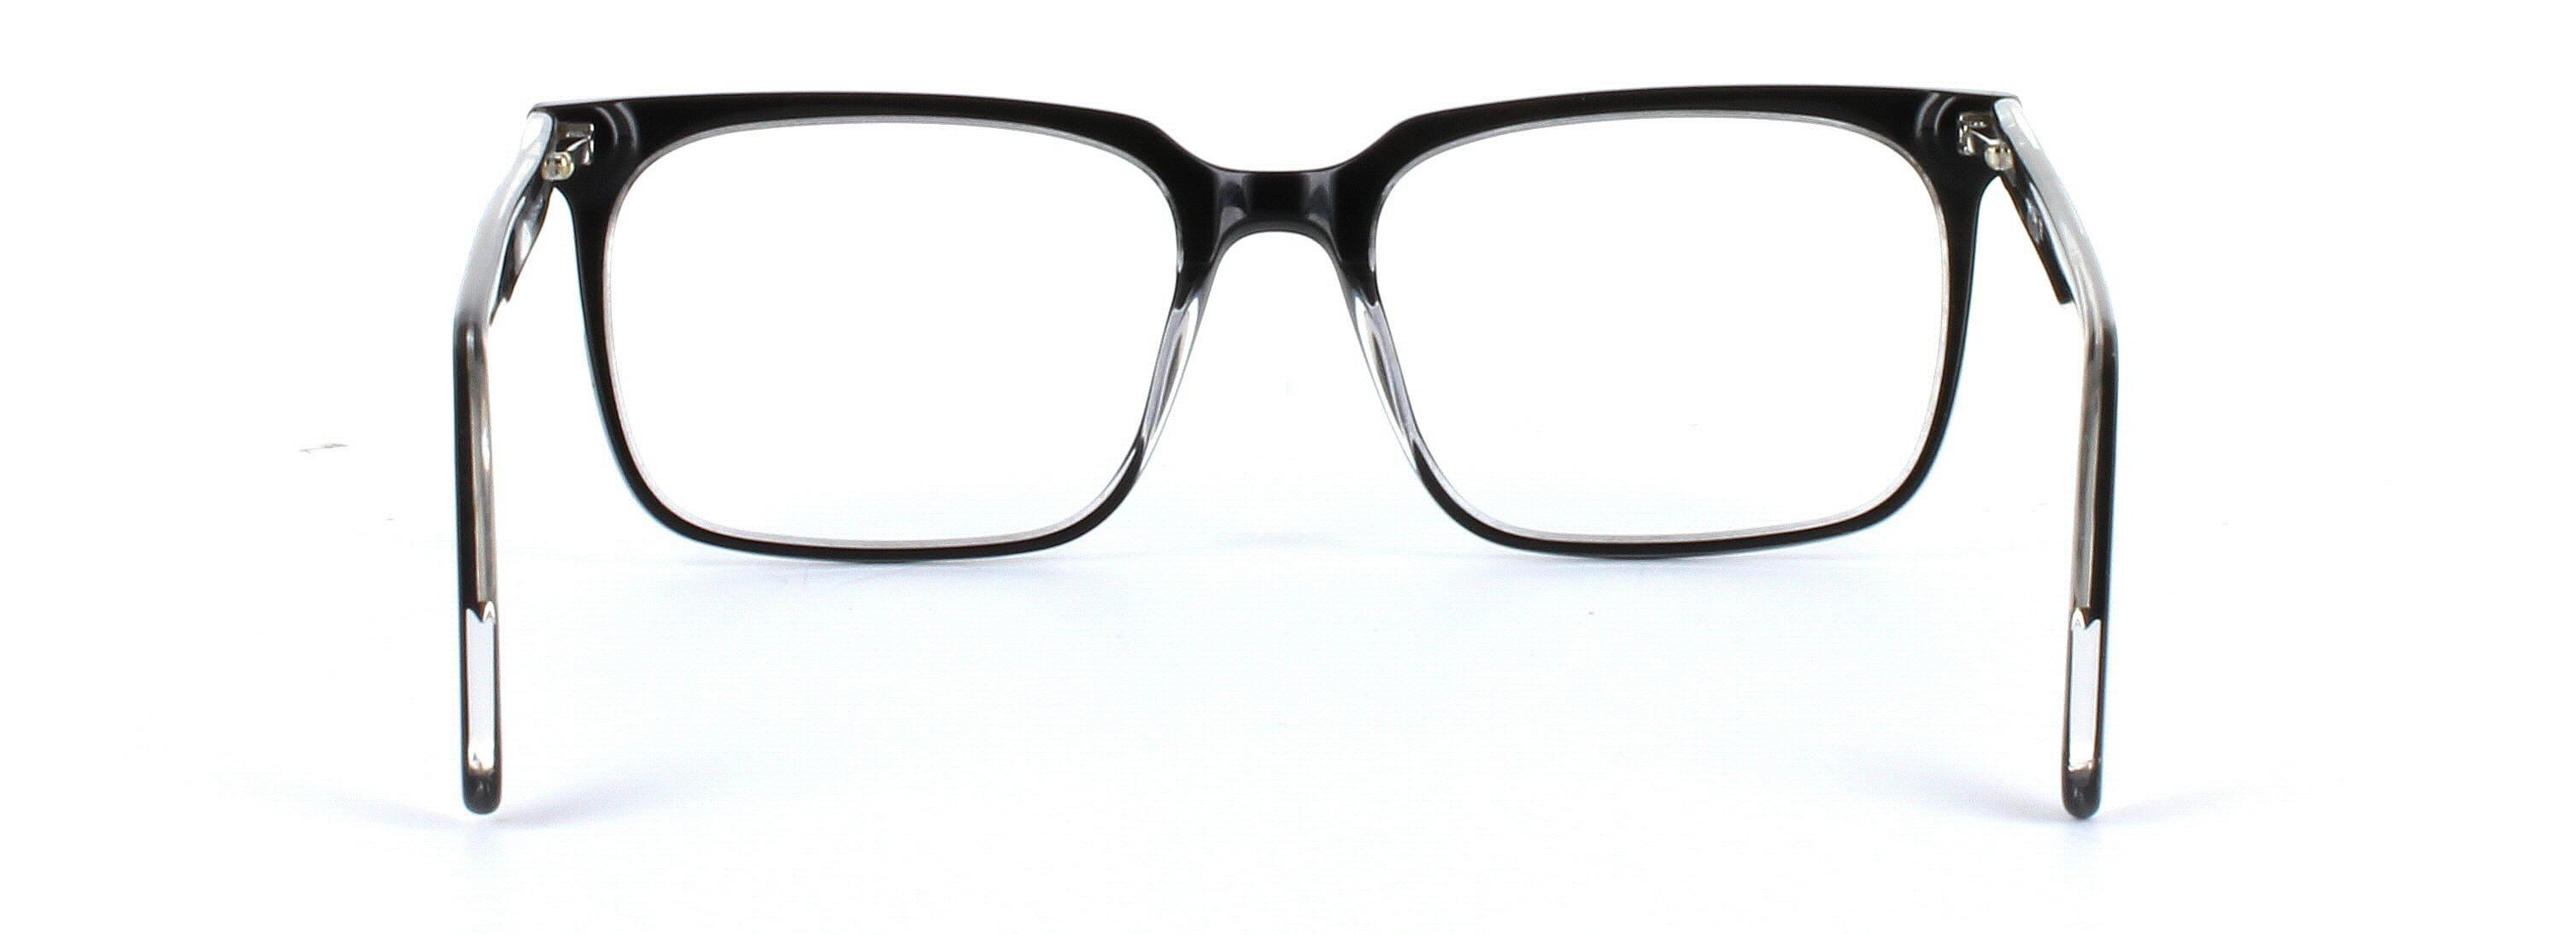 Coombe Black Full Rim Rectangular Acetate Glasses - Image View 3